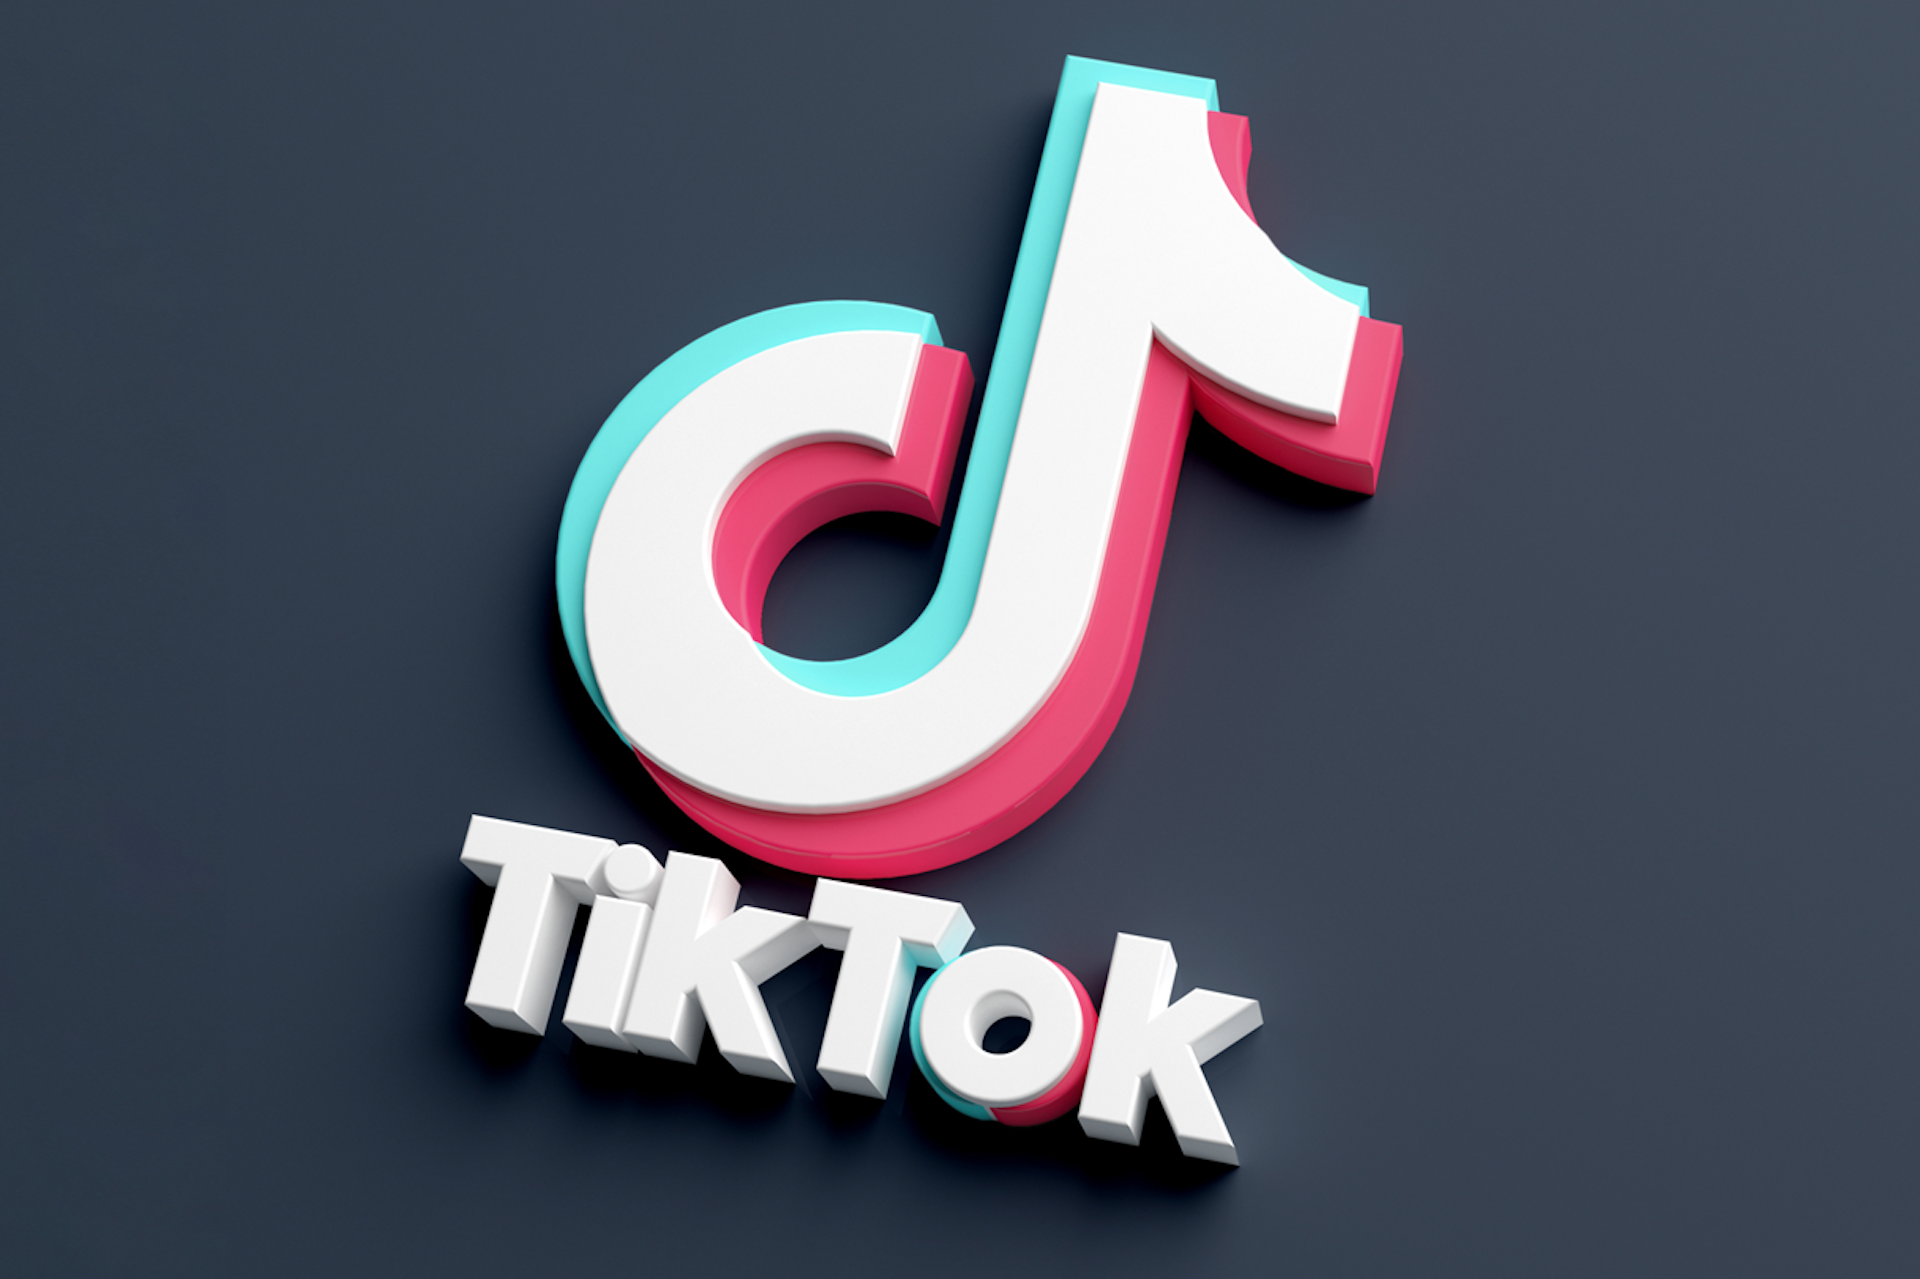 Large TikTok logo illustration on black background. All TikTok stats you need to know 